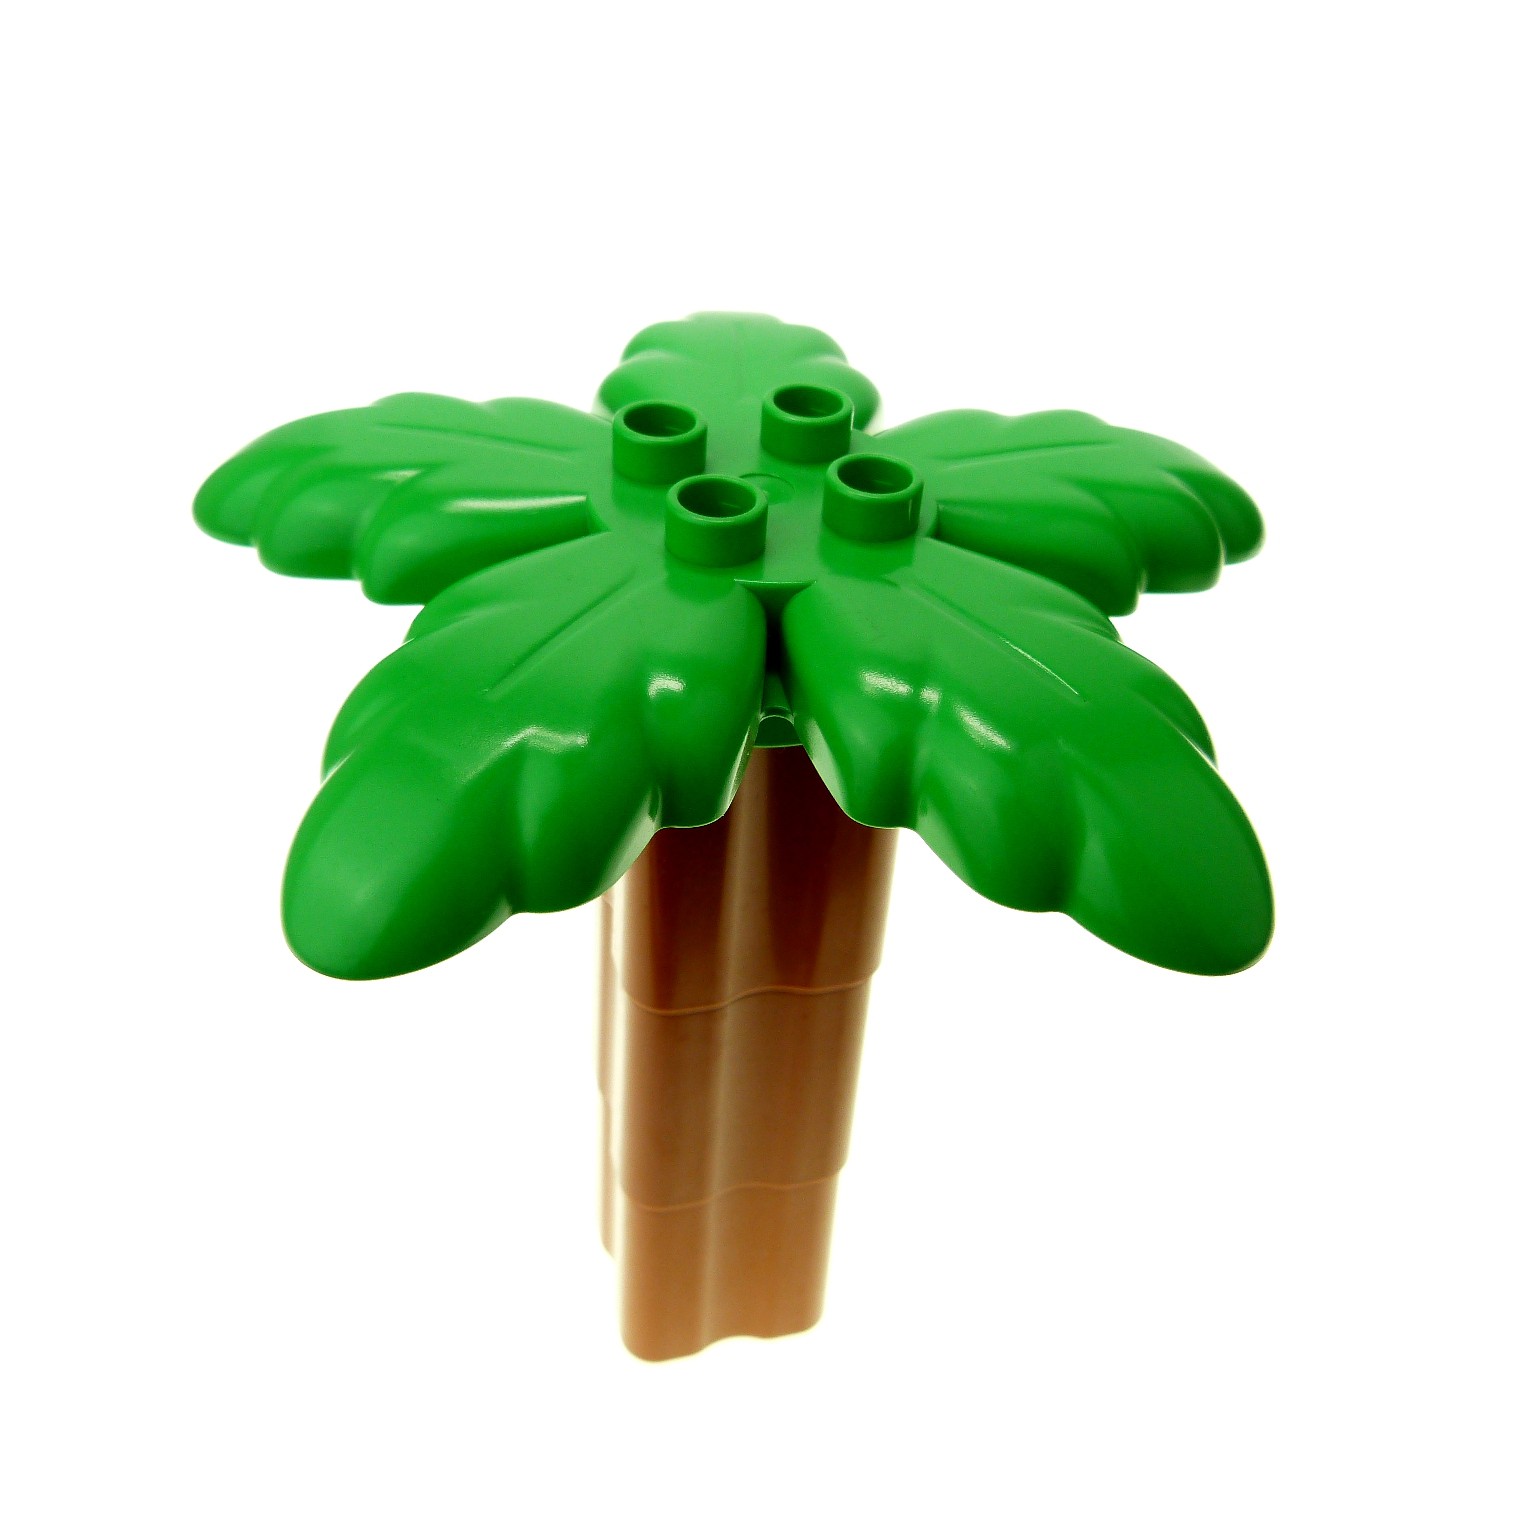 1 x lego duplo plant palm green leaf crown zoo safari dino 4100842 